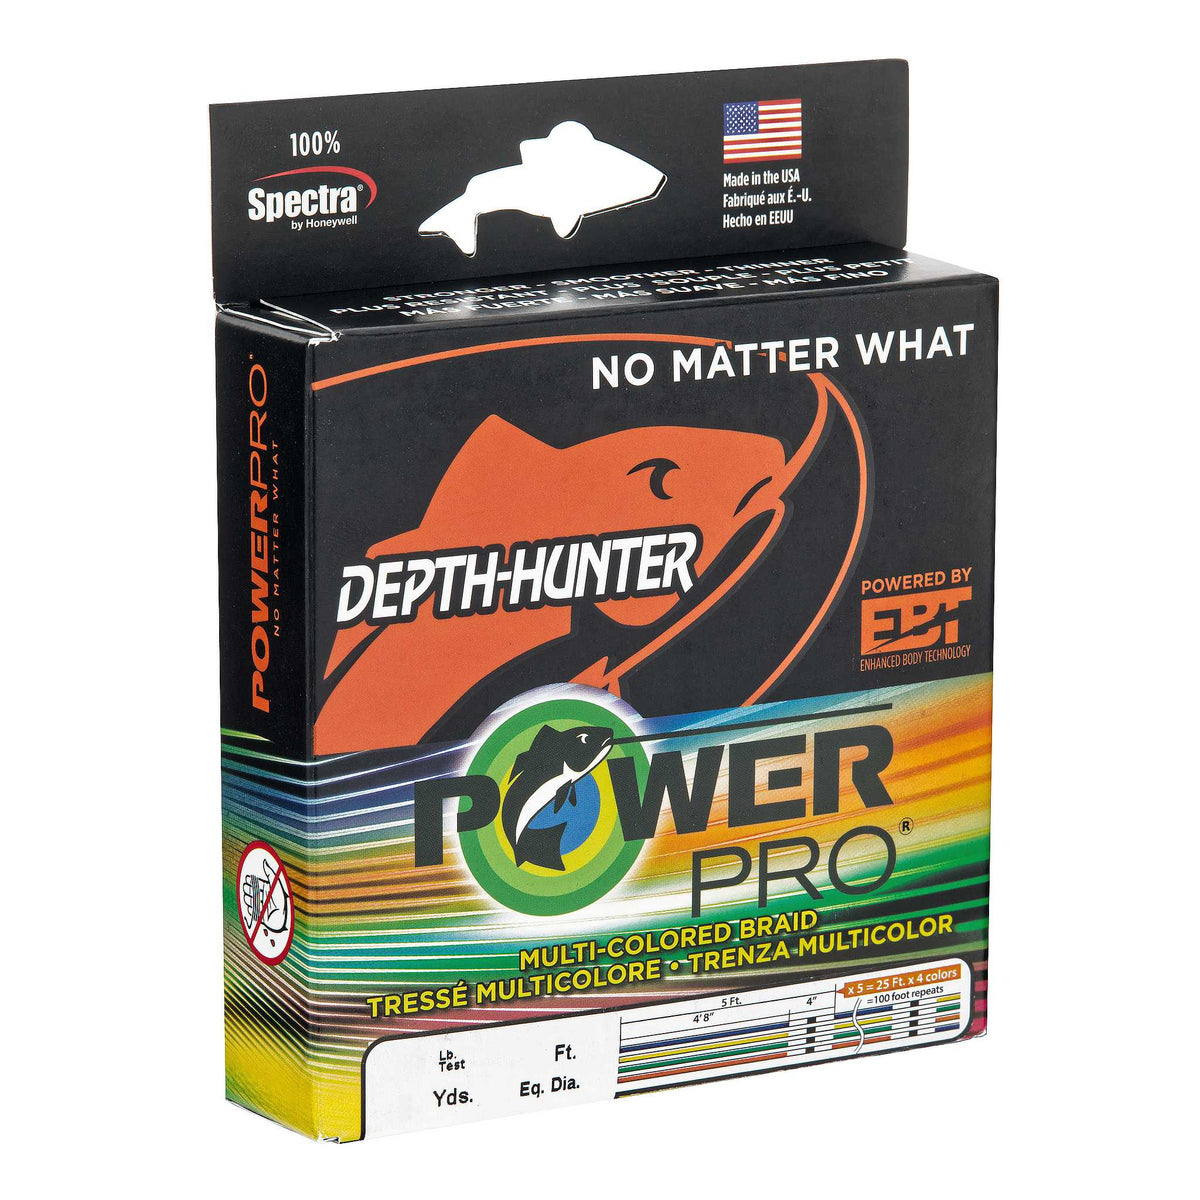 PowerPro Depth-Hunter Multi-Colored Braid